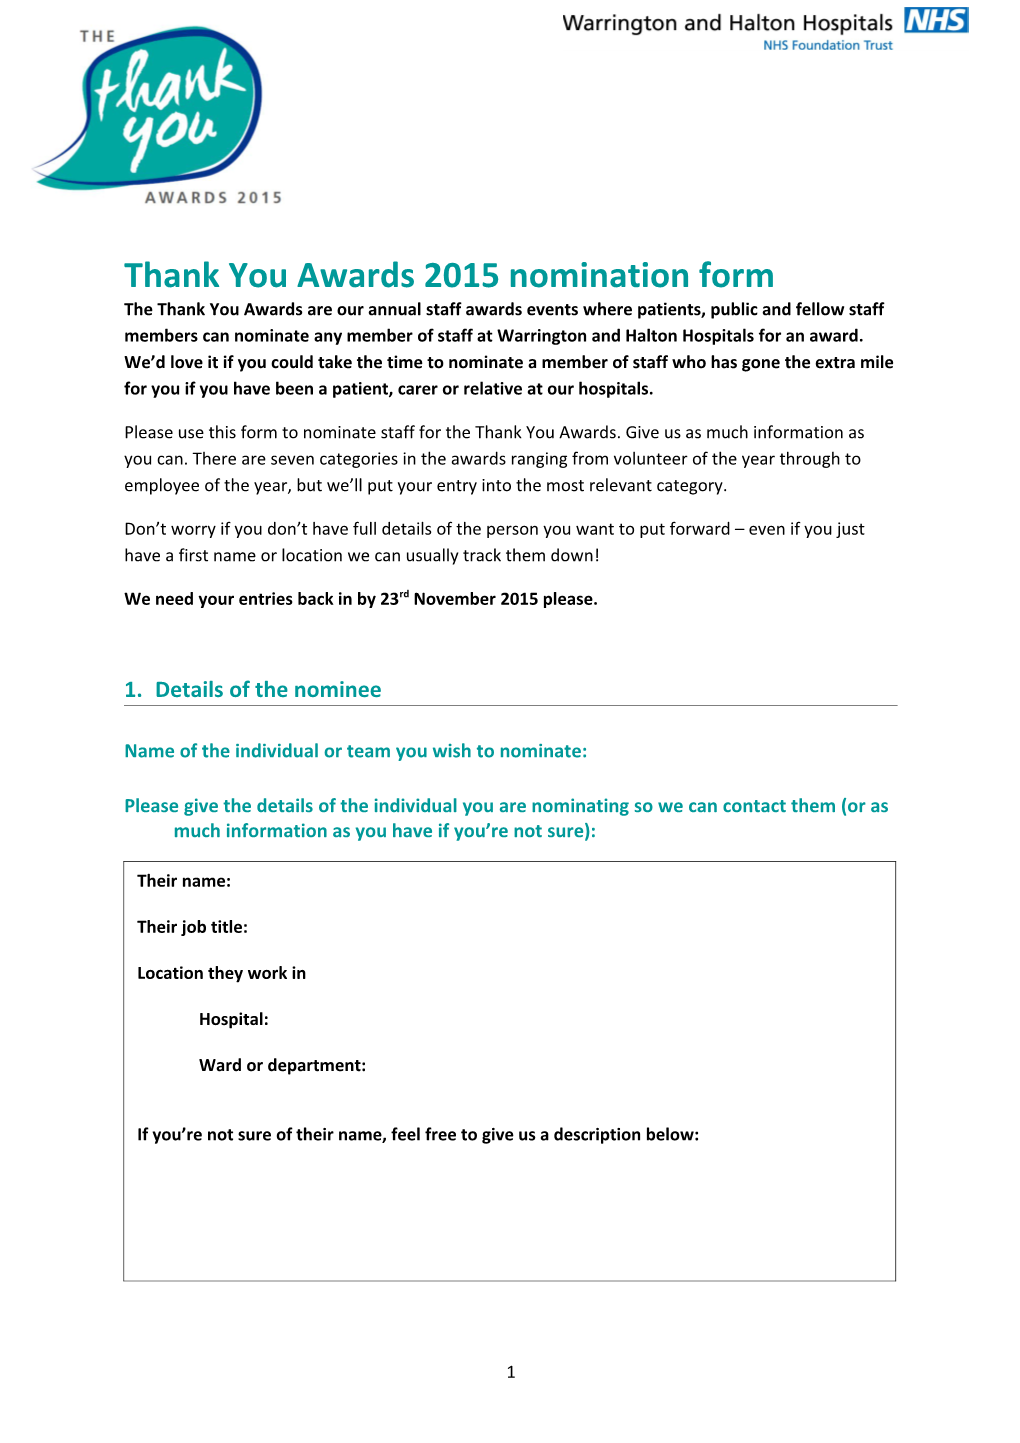 The Warrington and Halton Hospitals NHS Foundation Trust Staff Awards